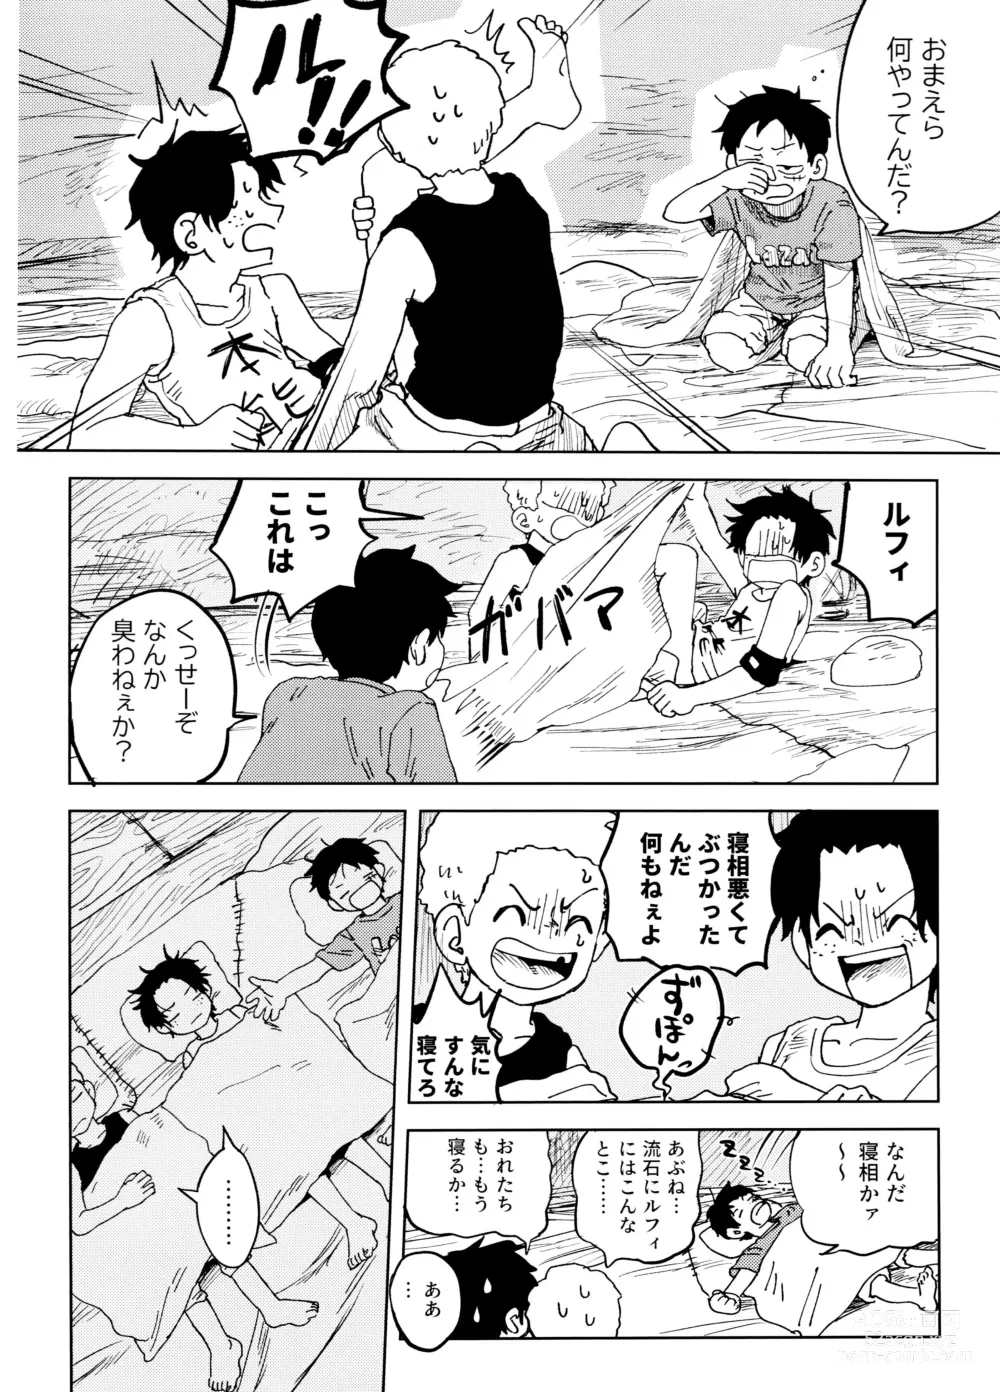 Page 49 of doujinshi Himitsu no Colubo Yama